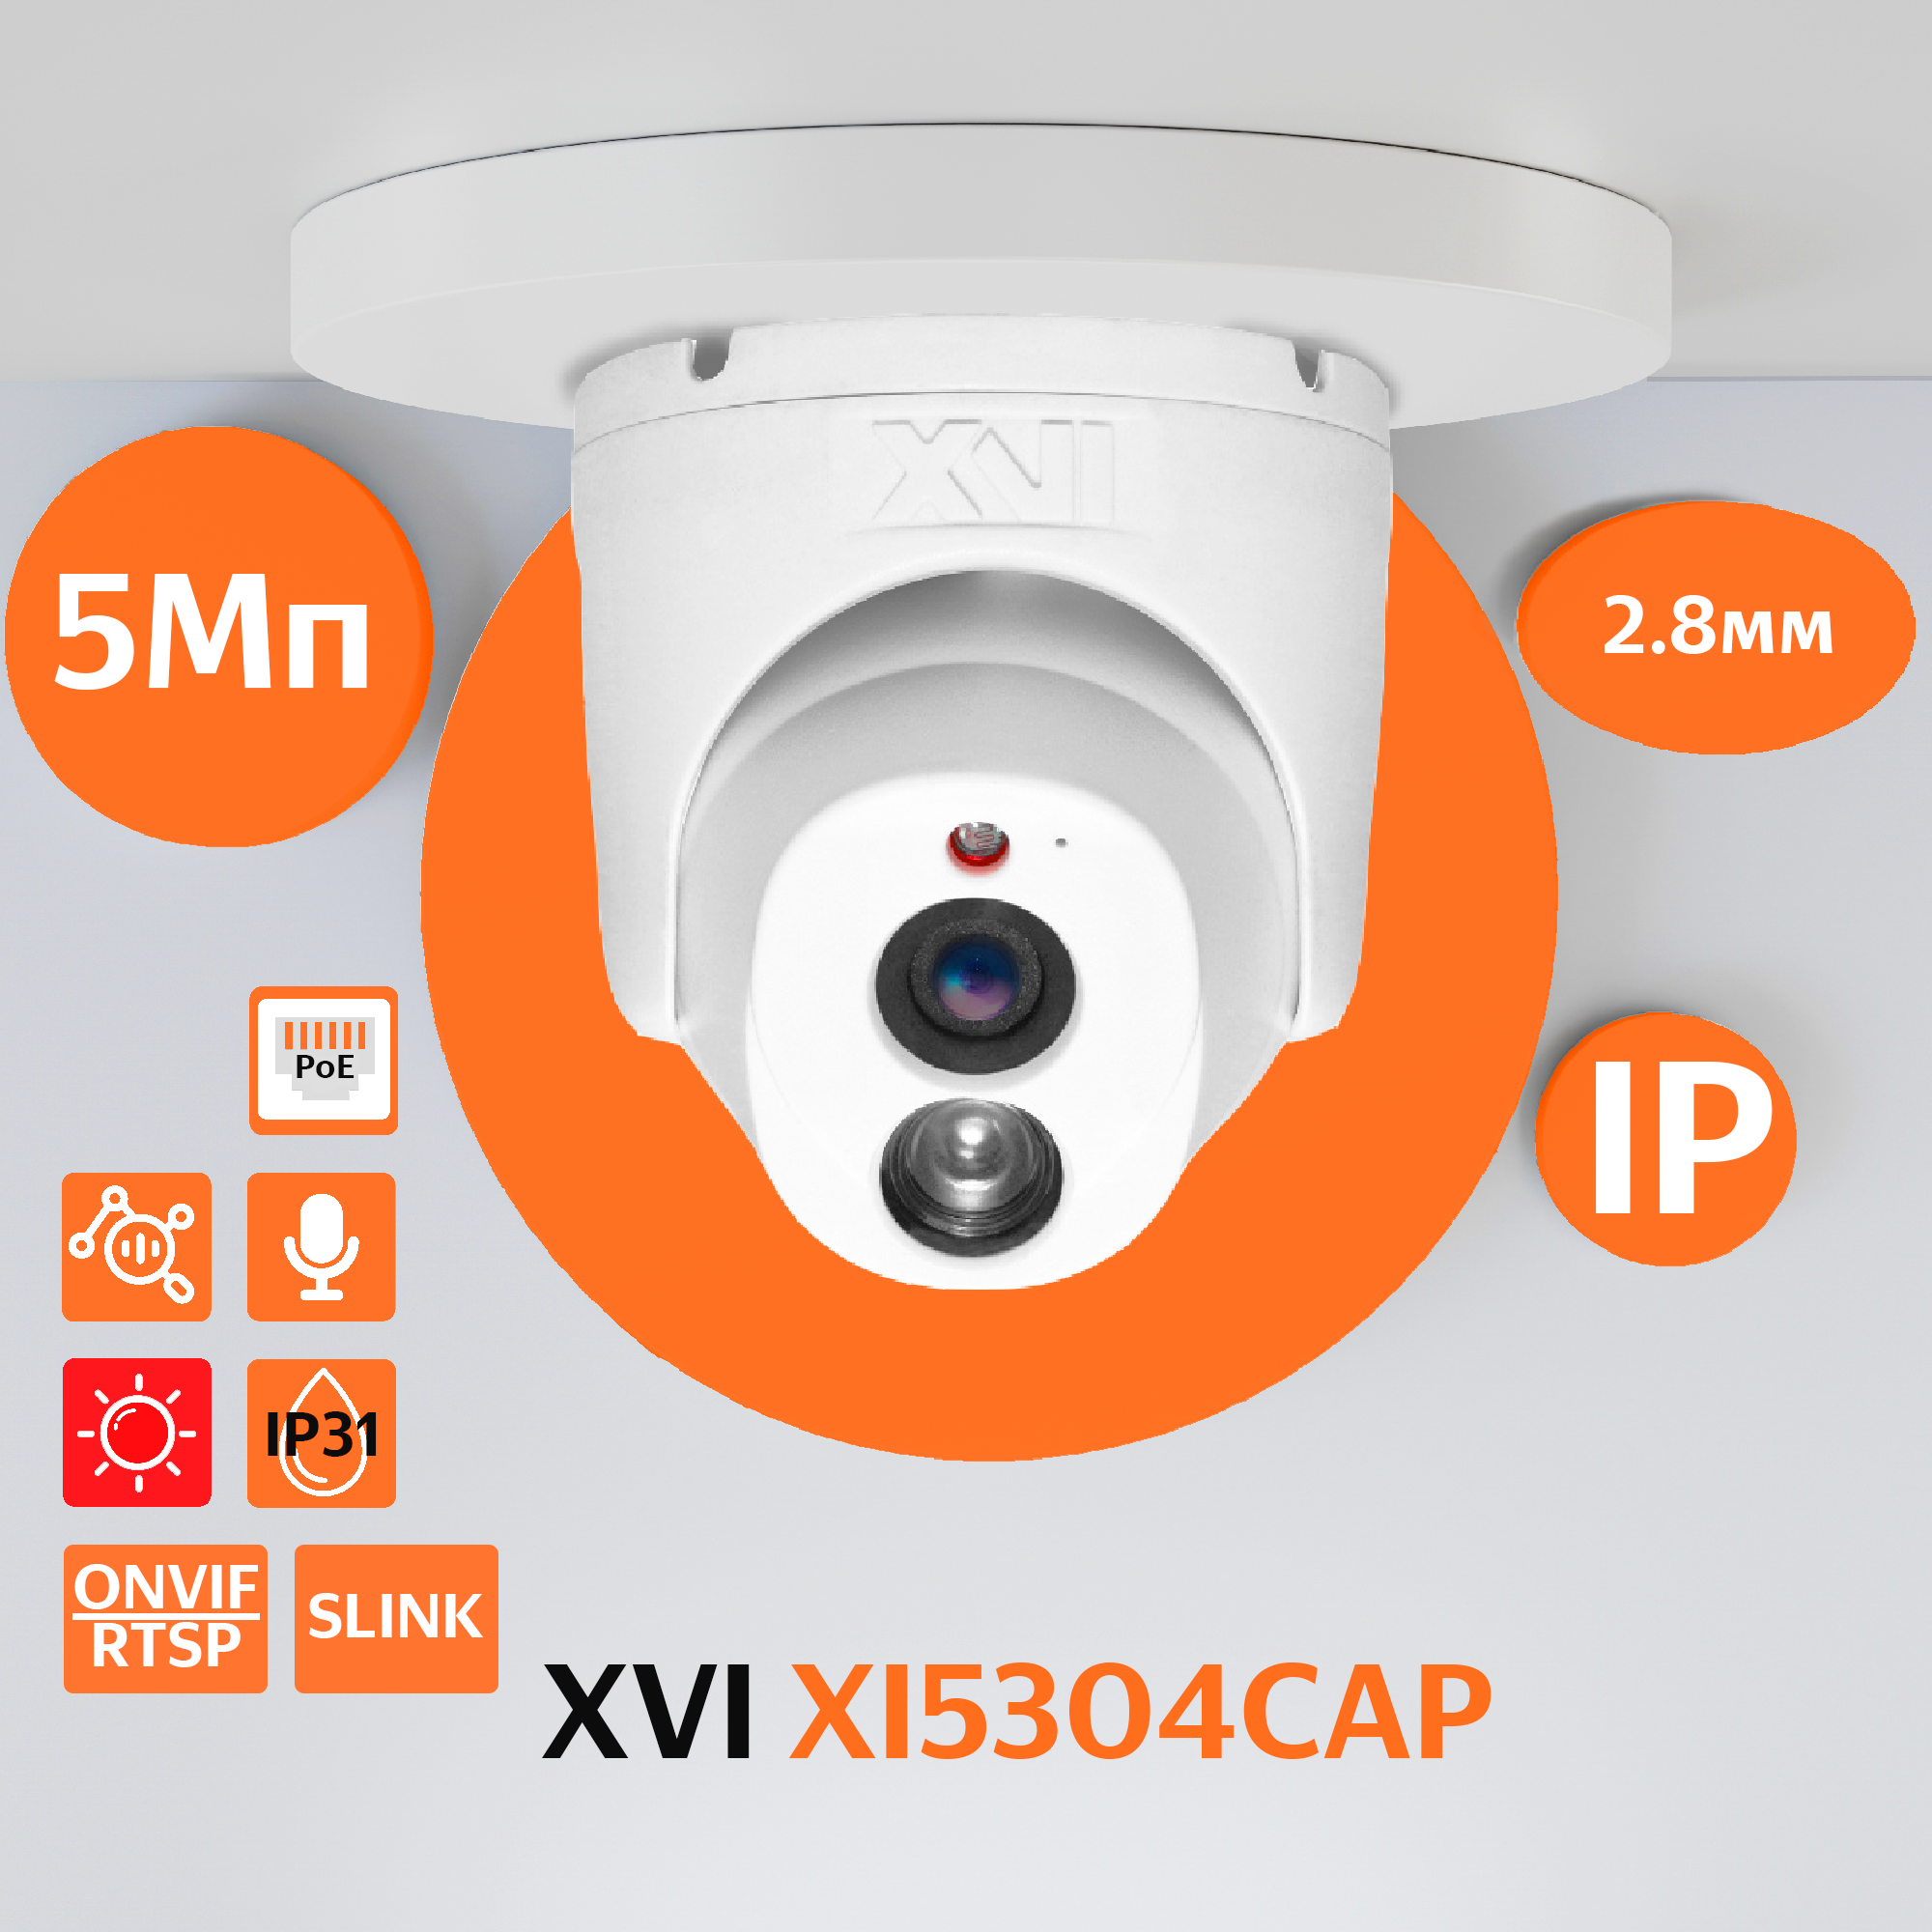 Купольная IP камера XVI XI5304CAP2.8, 5Мп, фикс.объектив, встр.мкрф, PoE, ИК f= 2.8мм купольная ip камера xvi xi2204cap 2мп фикс объектив встр мкрф poe ик f 2 8мм f 1 0